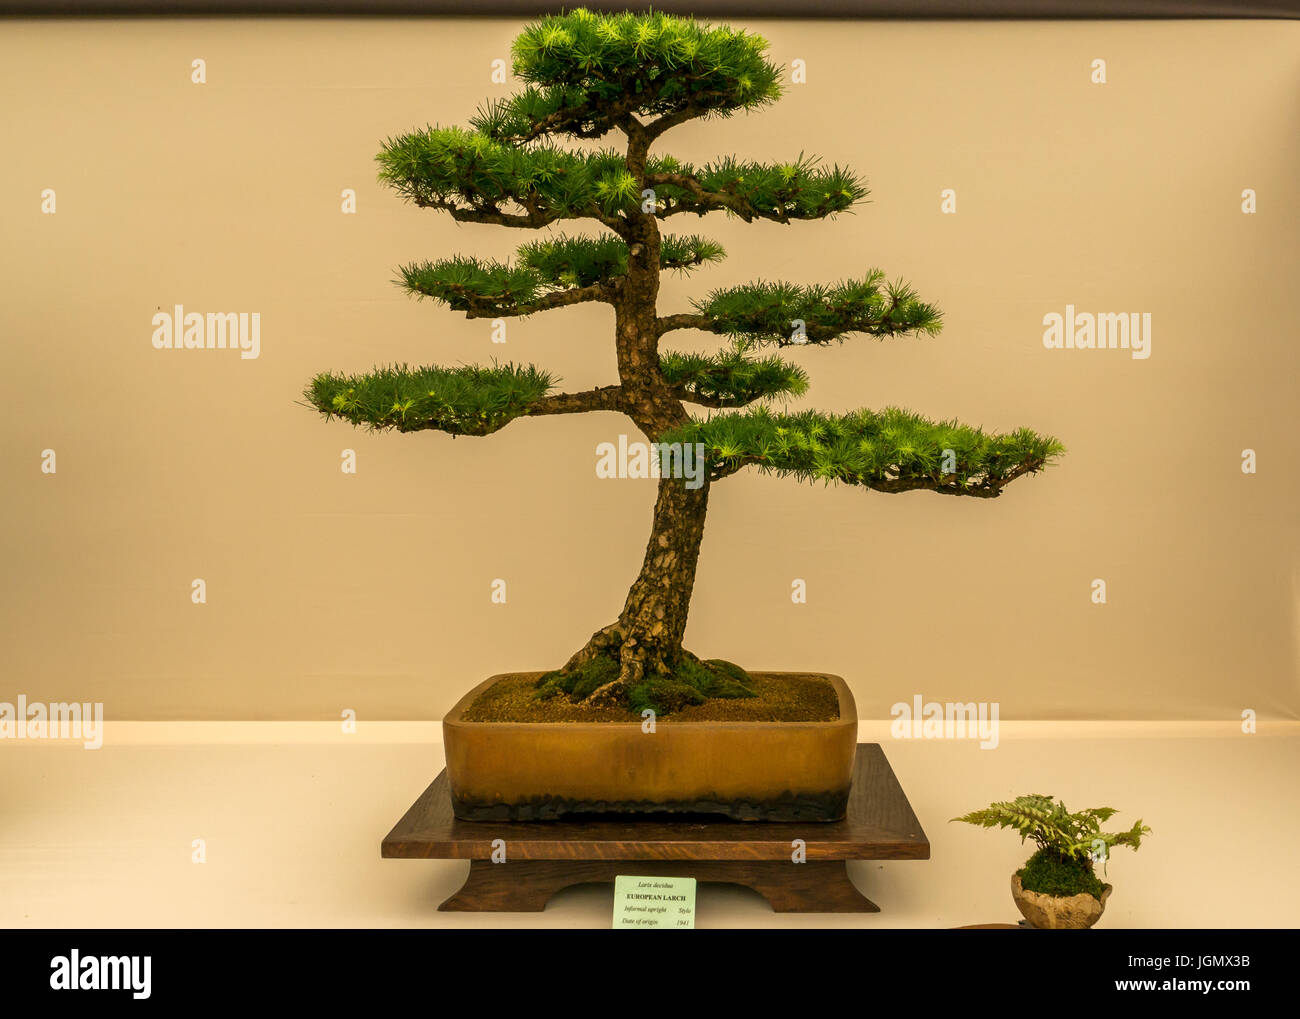 European Larch, Larix decidua, bonsai tree display at RHS flower Show, England, UK Stock Photo